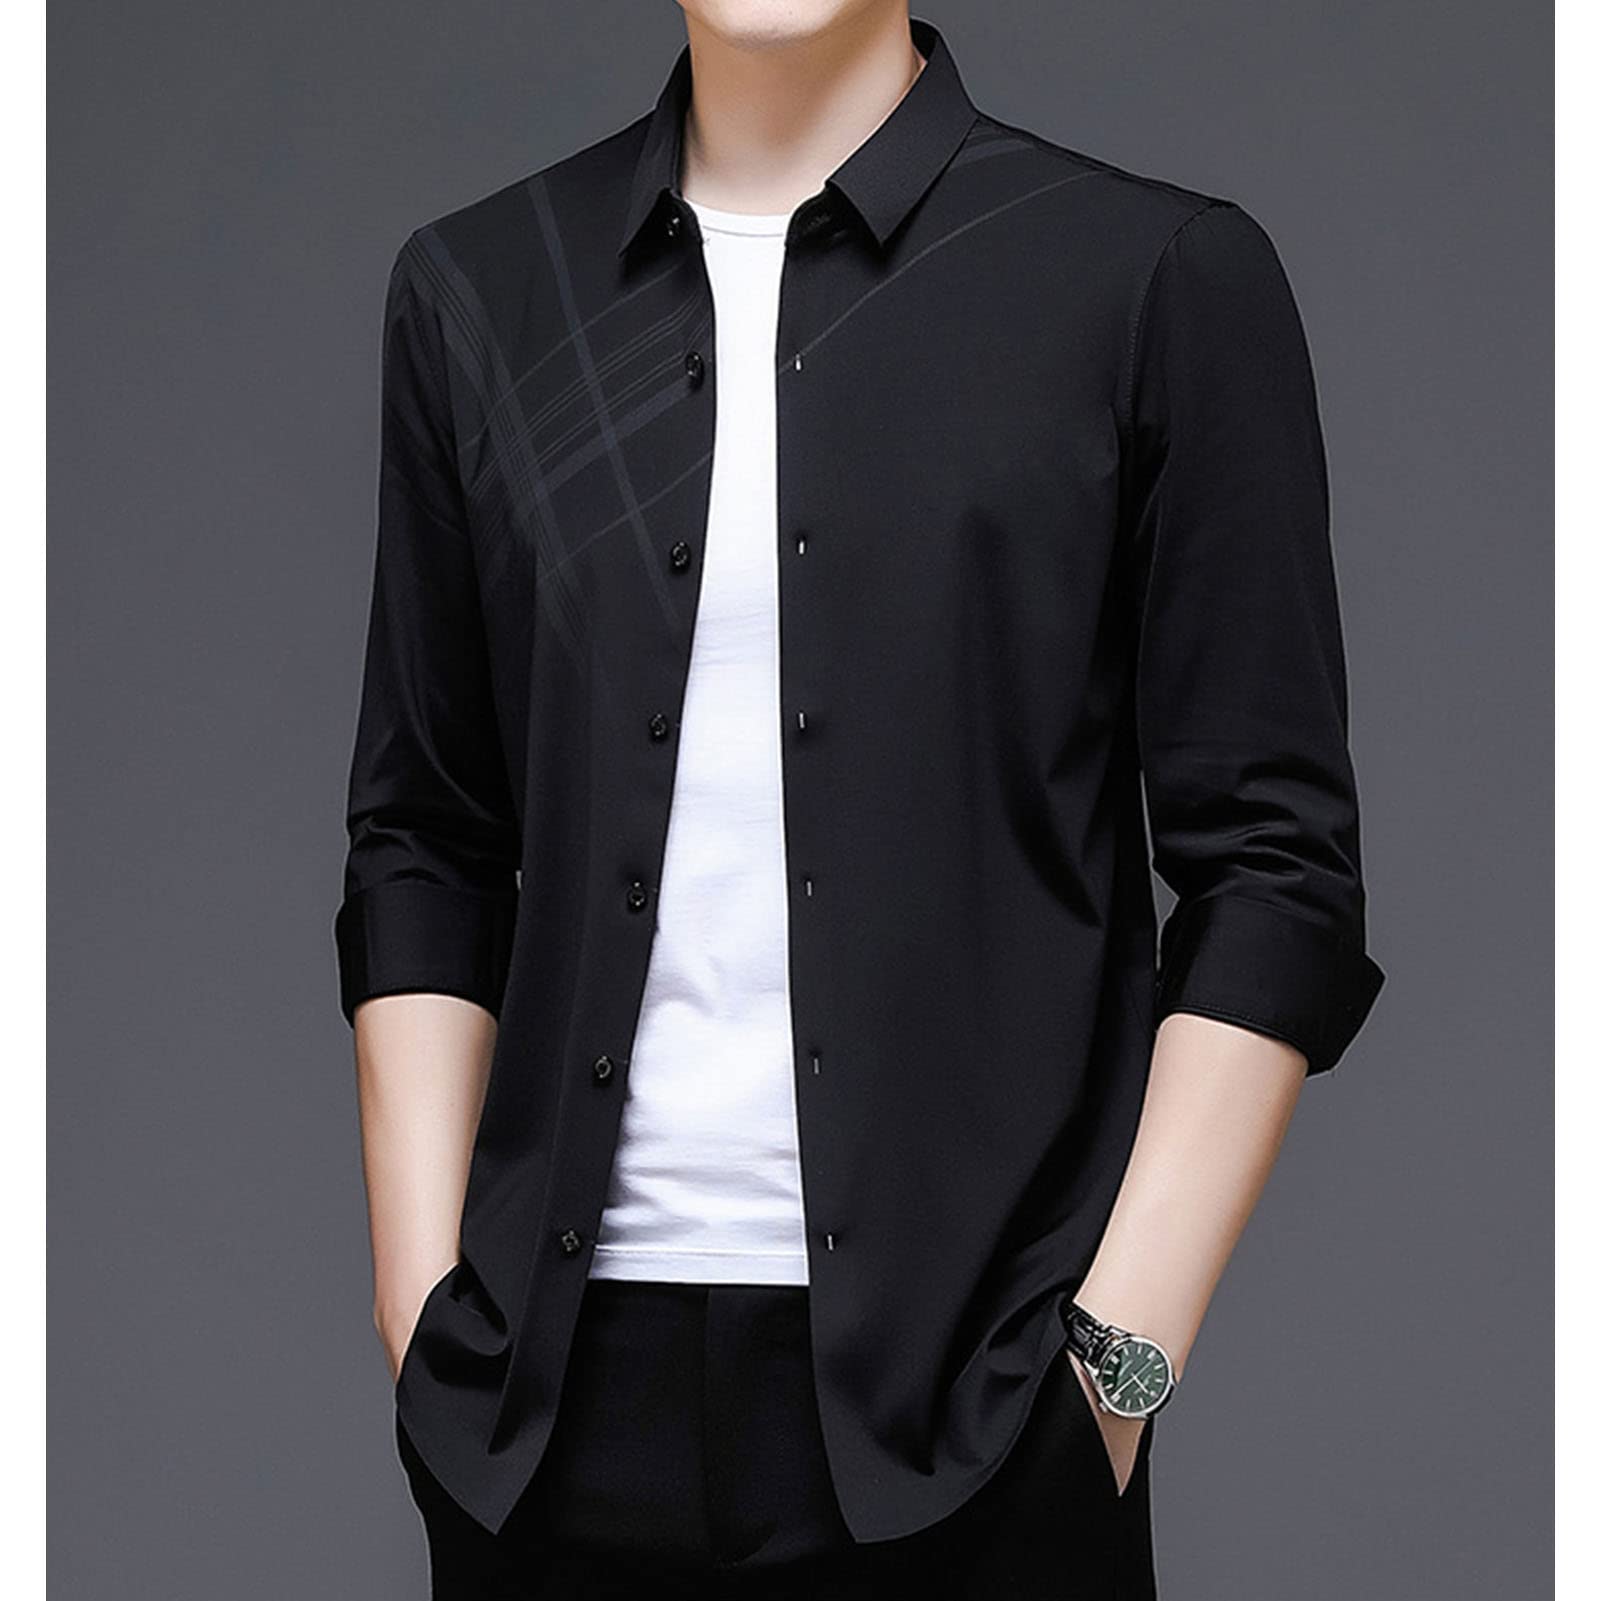 Men Plaid Printed Dress Shirt Turn-Down Collar Button Down Business Shirts Casual Slim Fit Long Sleeve Shirts (Black,56)